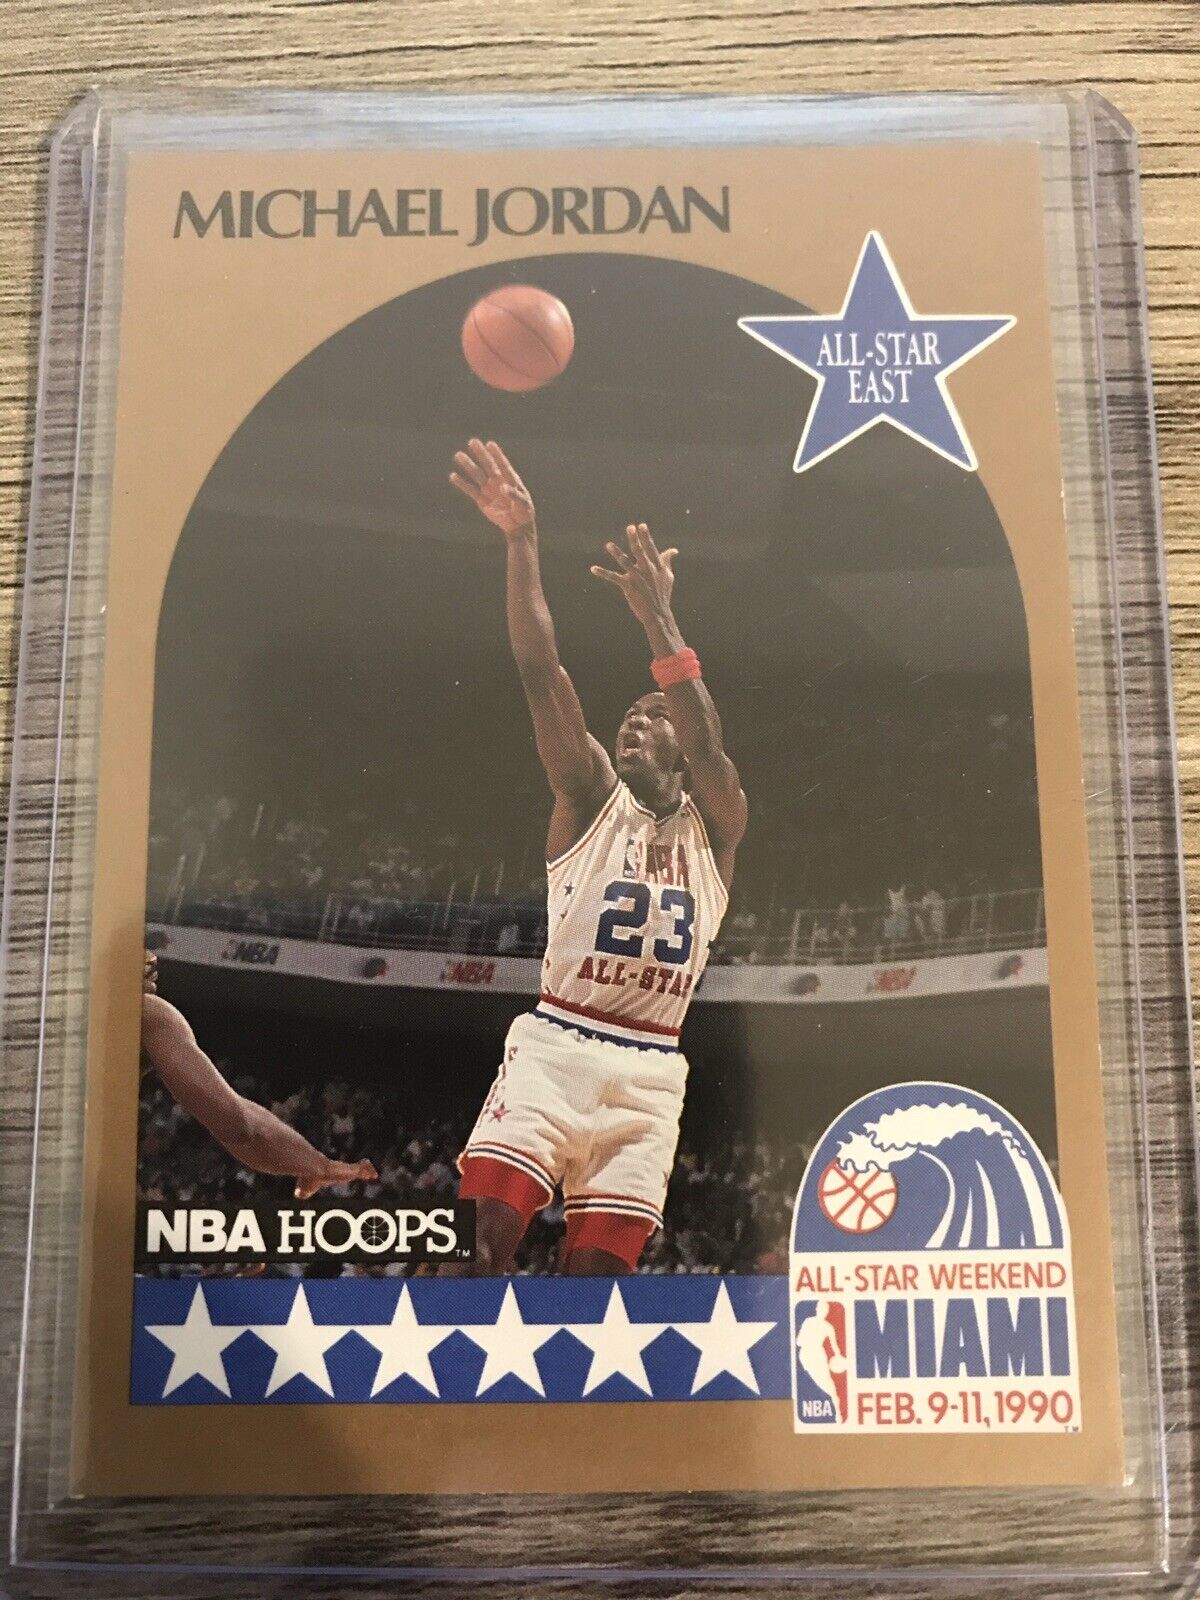 MICHAEL JORDAN 1990 NBA Hoops All-Star card #5. | eBay